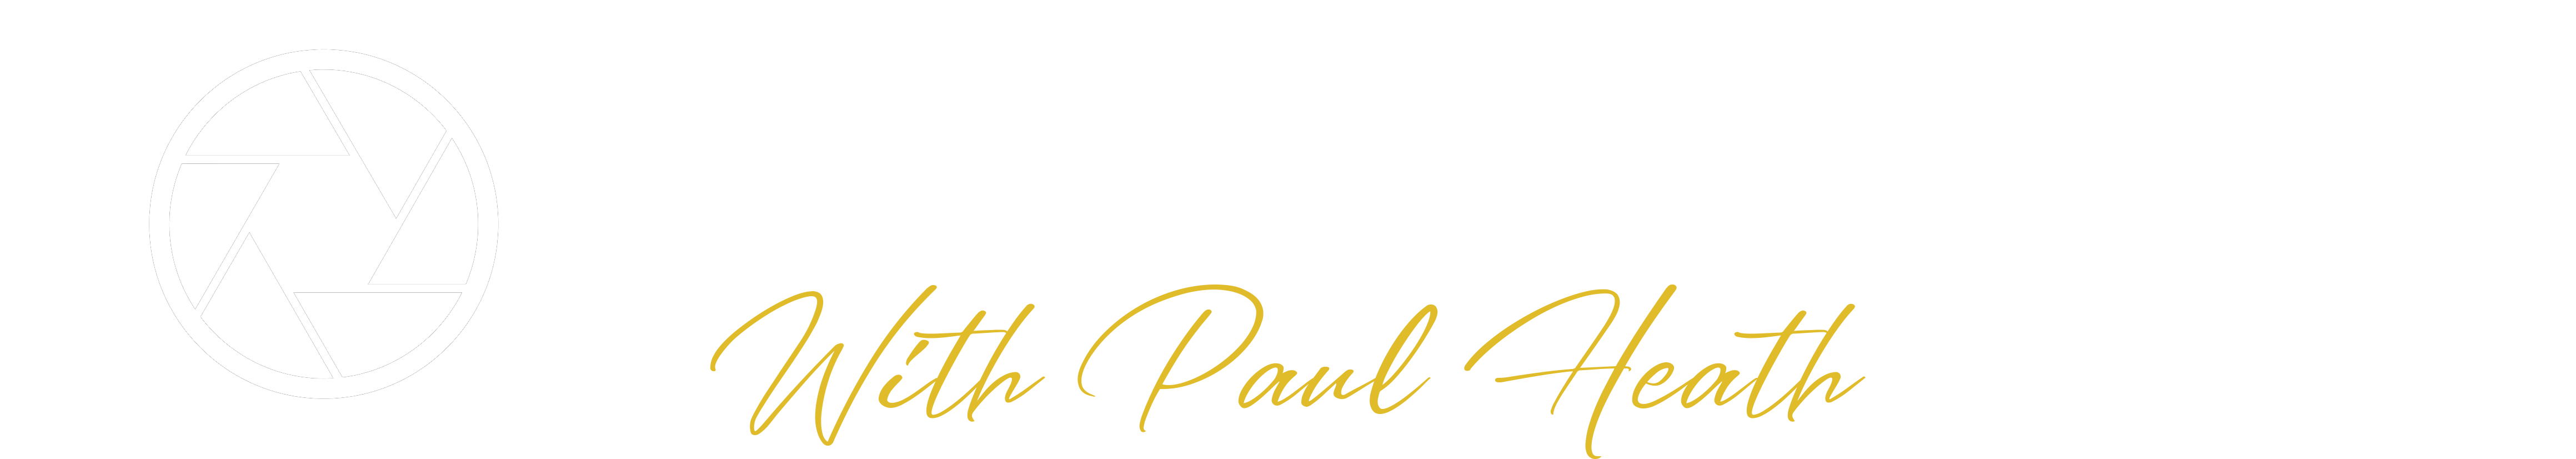 Birdphotographyworkshops